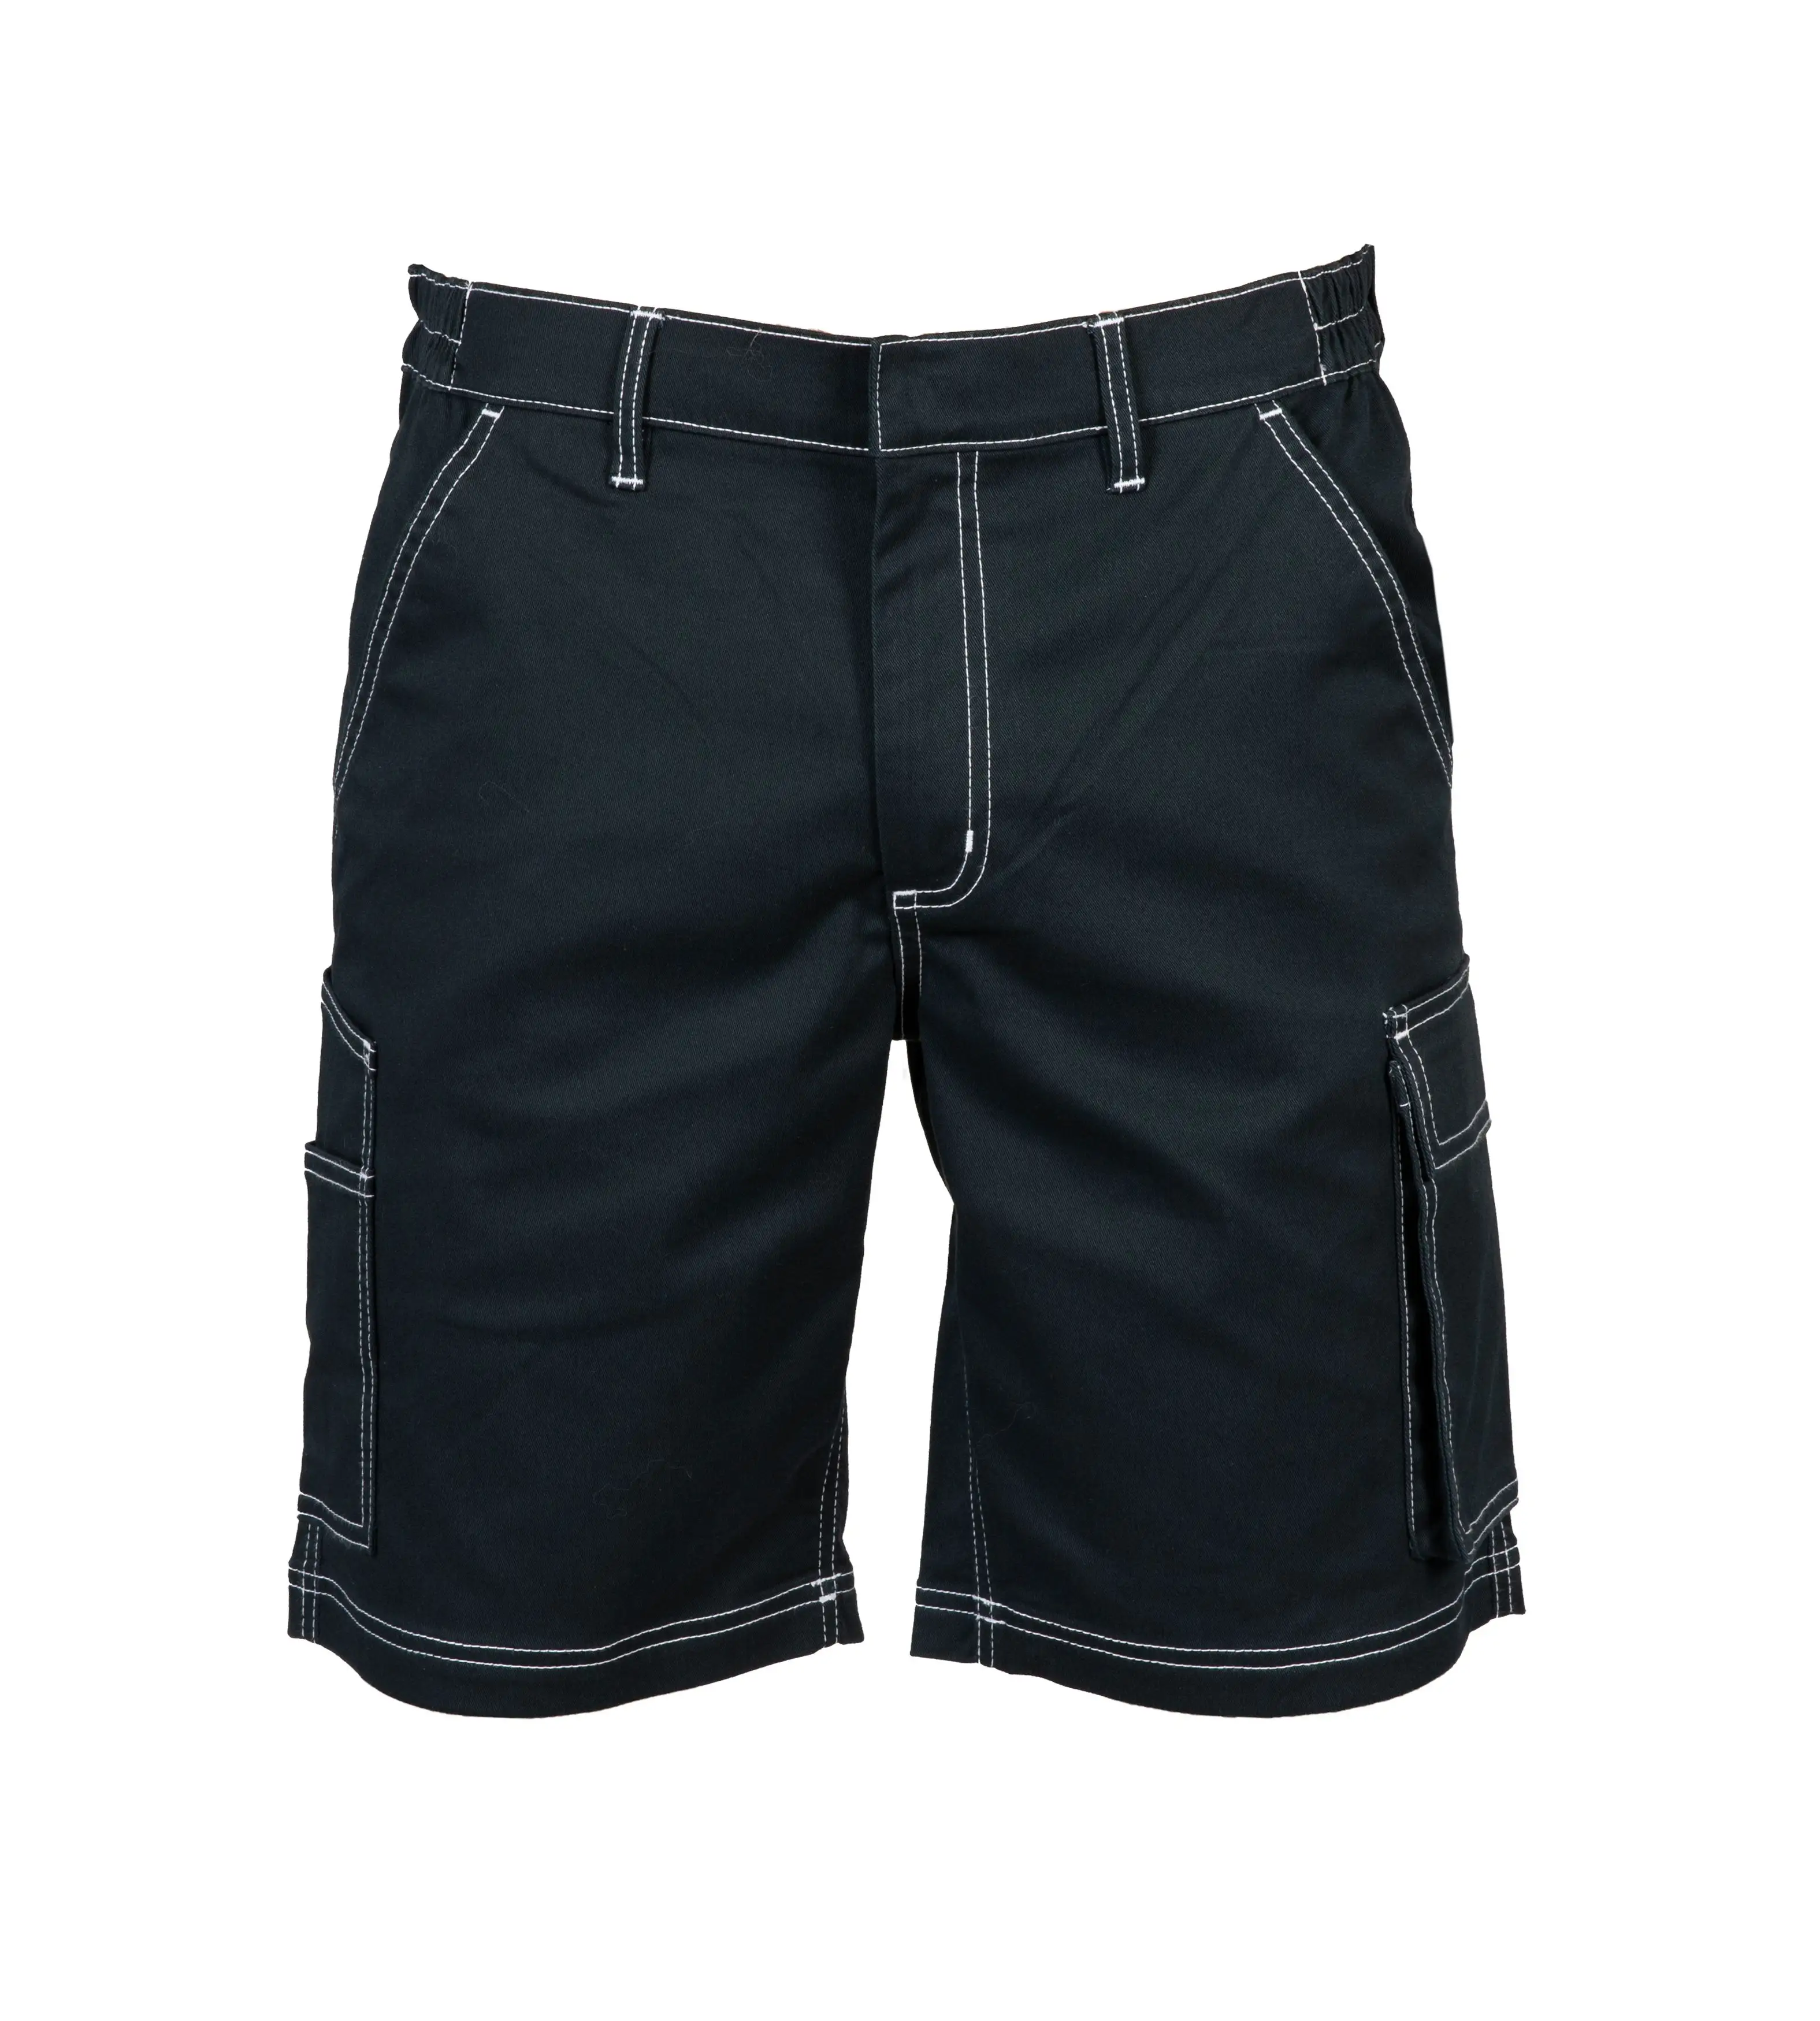 Pantalone vigo stretch shorts - black - s